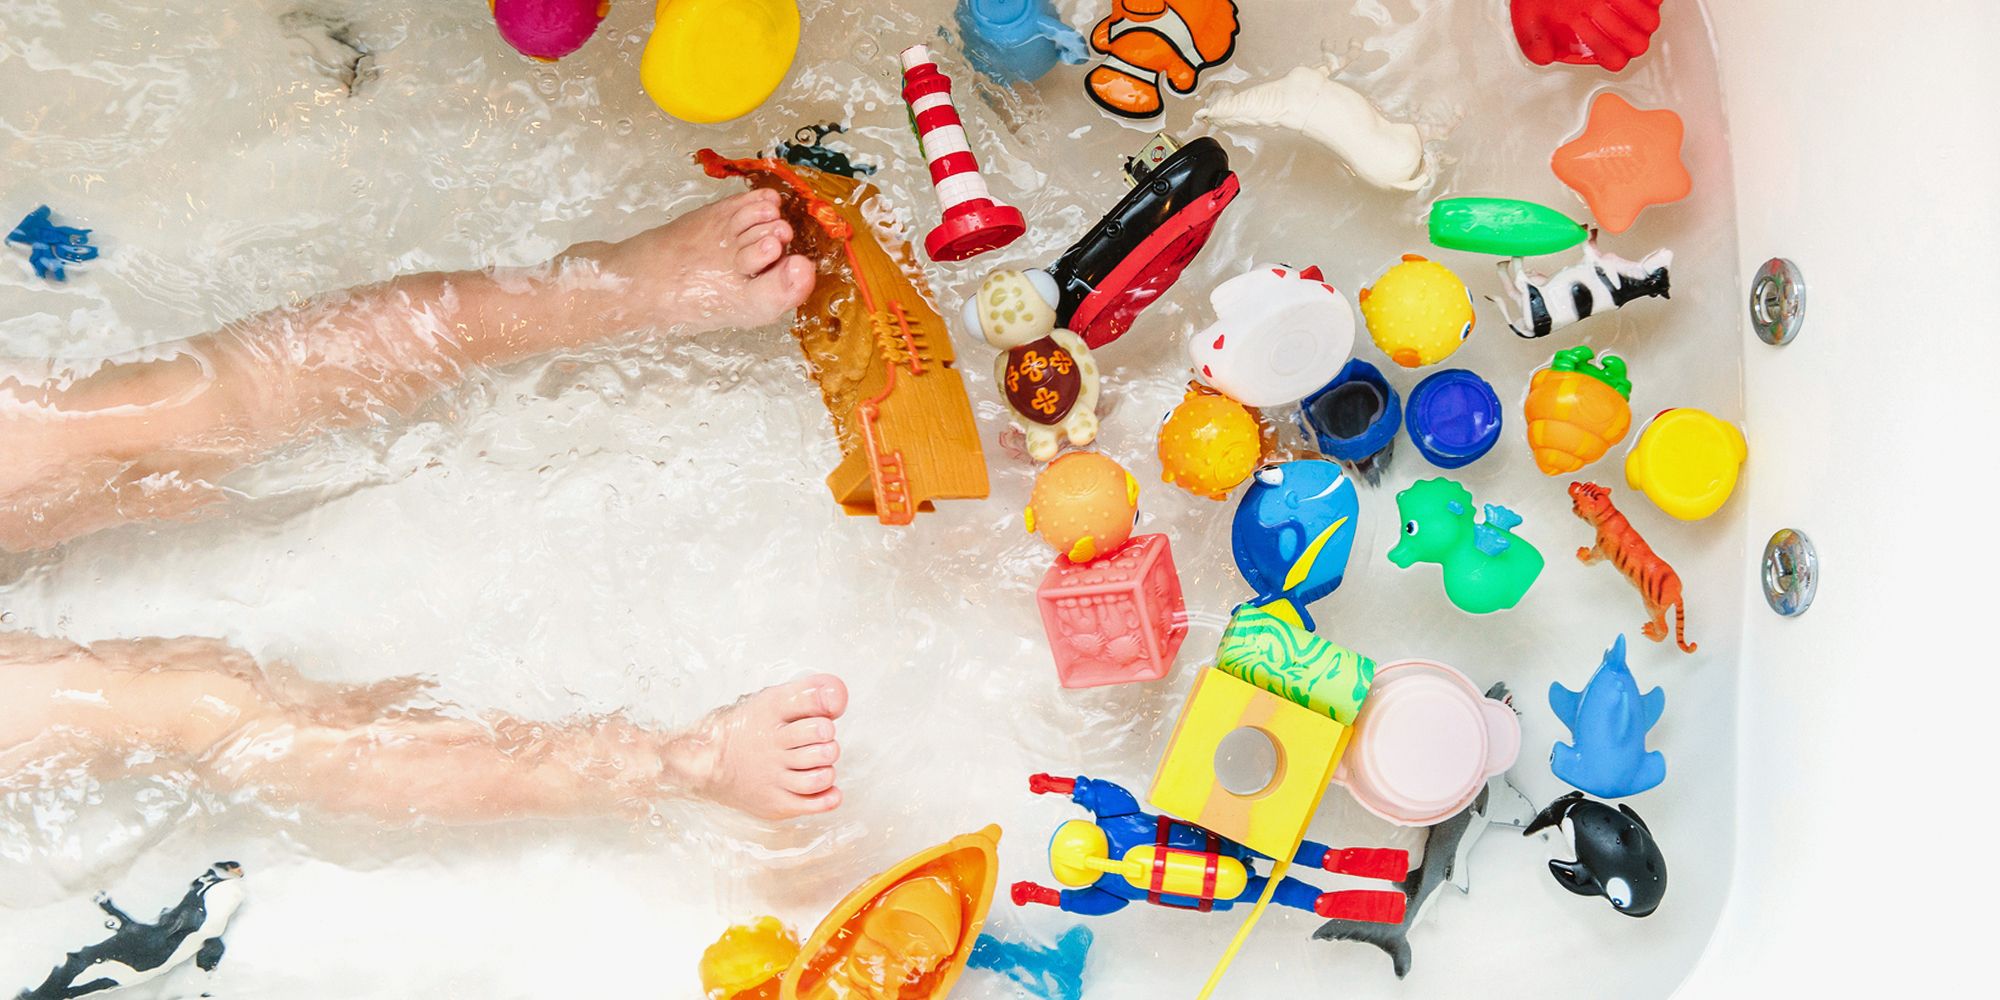 How To Clean Bath Toys With Bleach